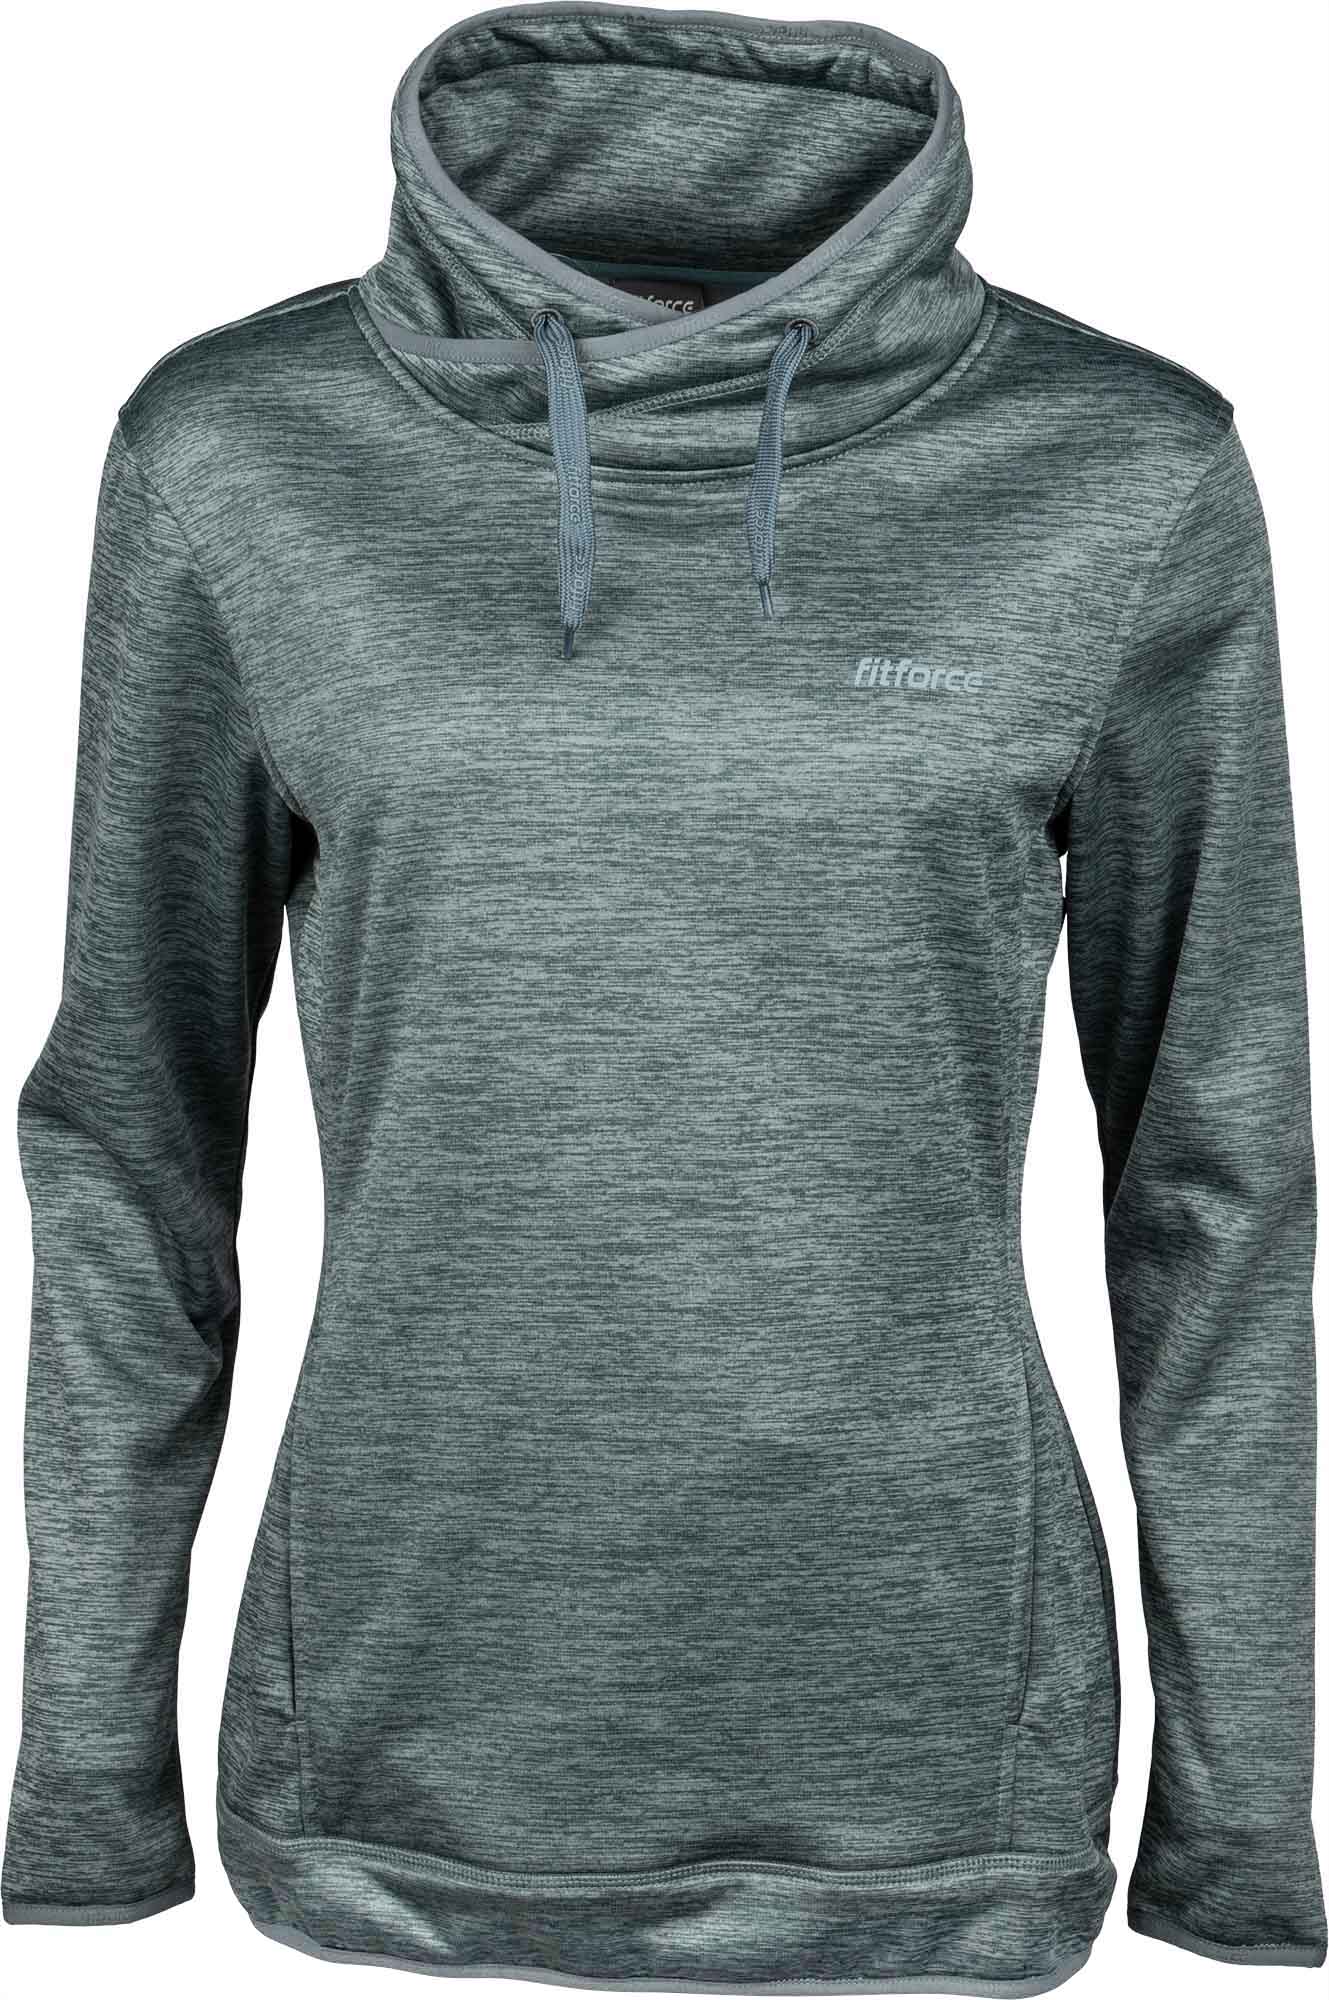 Women's fitness sweatshirt